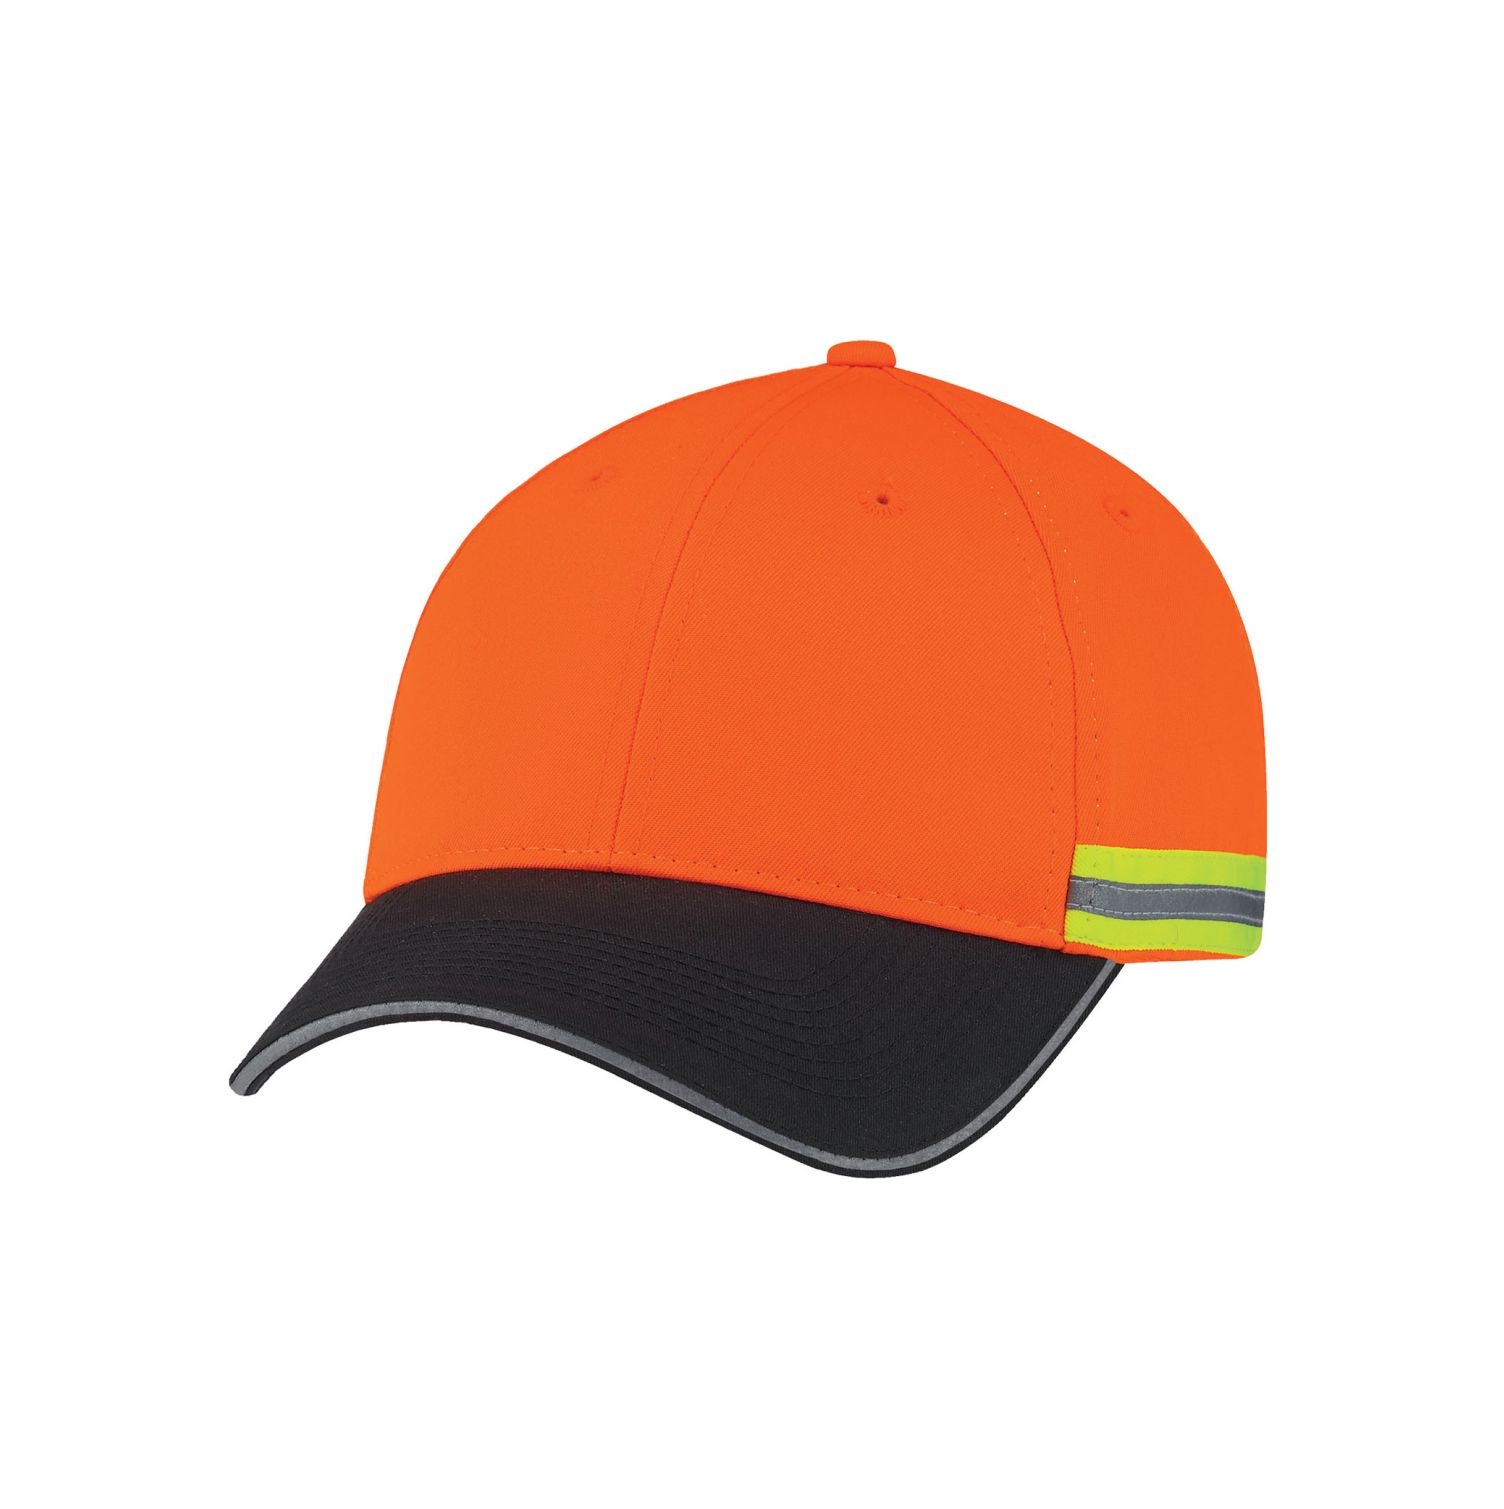 AJM Polycotton / Polyester 6 Panel Constructed Full-Fit Hat #8C079M Orange